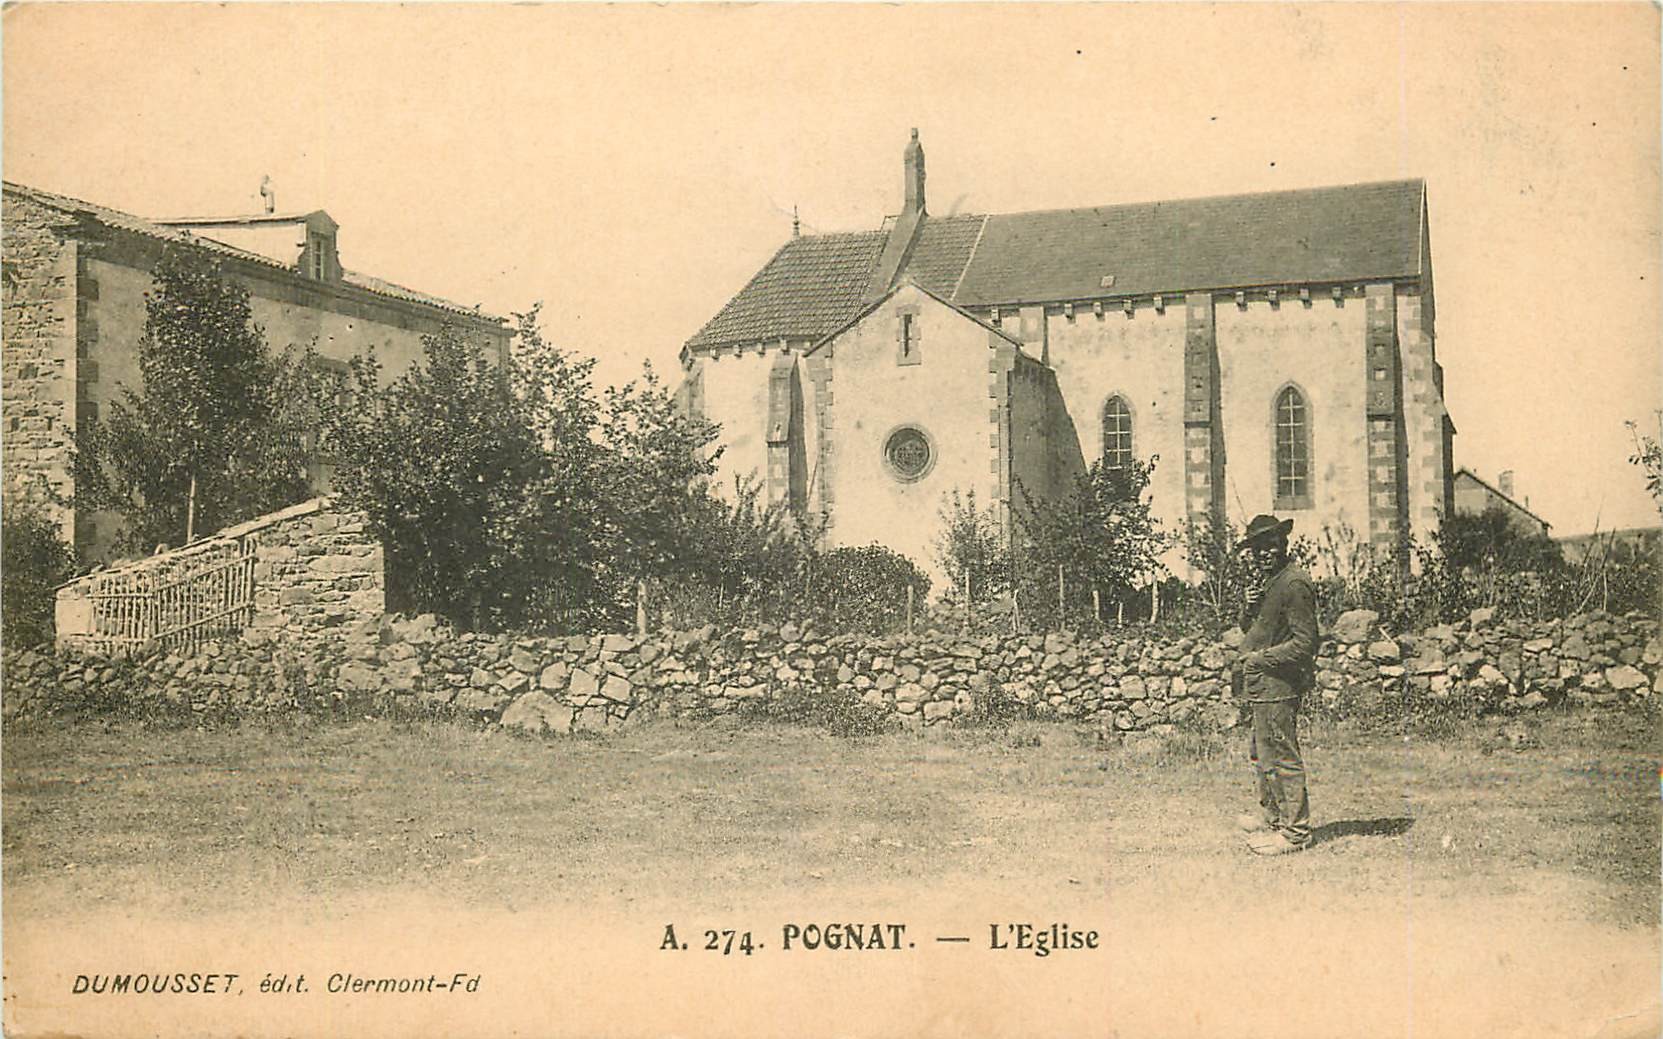 WW 63 POGNAT. Paysan devant l'Eglise